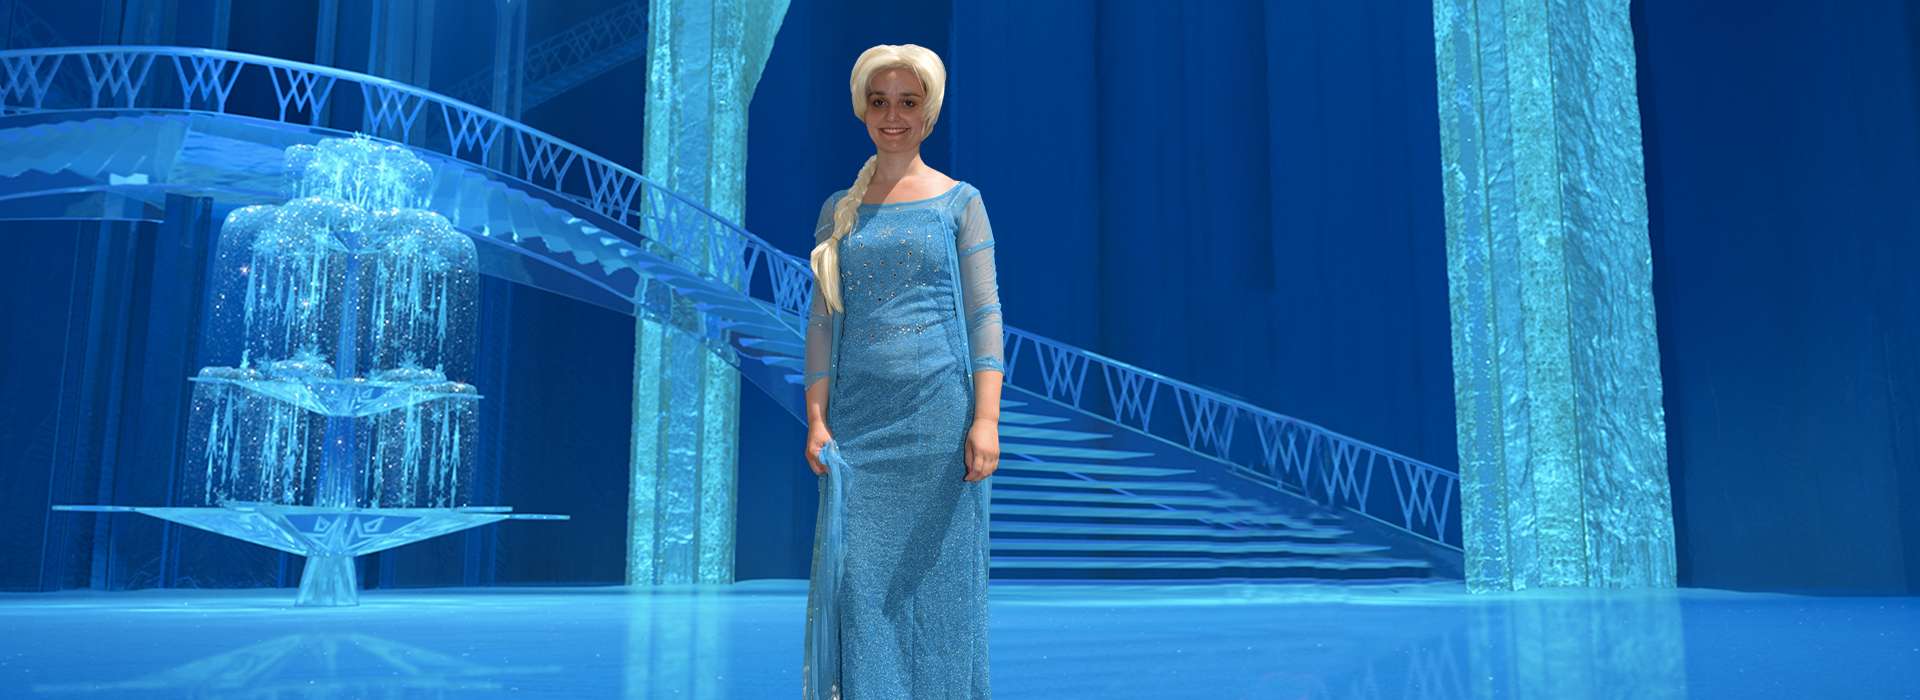 Slider d'images de l'animation La Reine des neiges